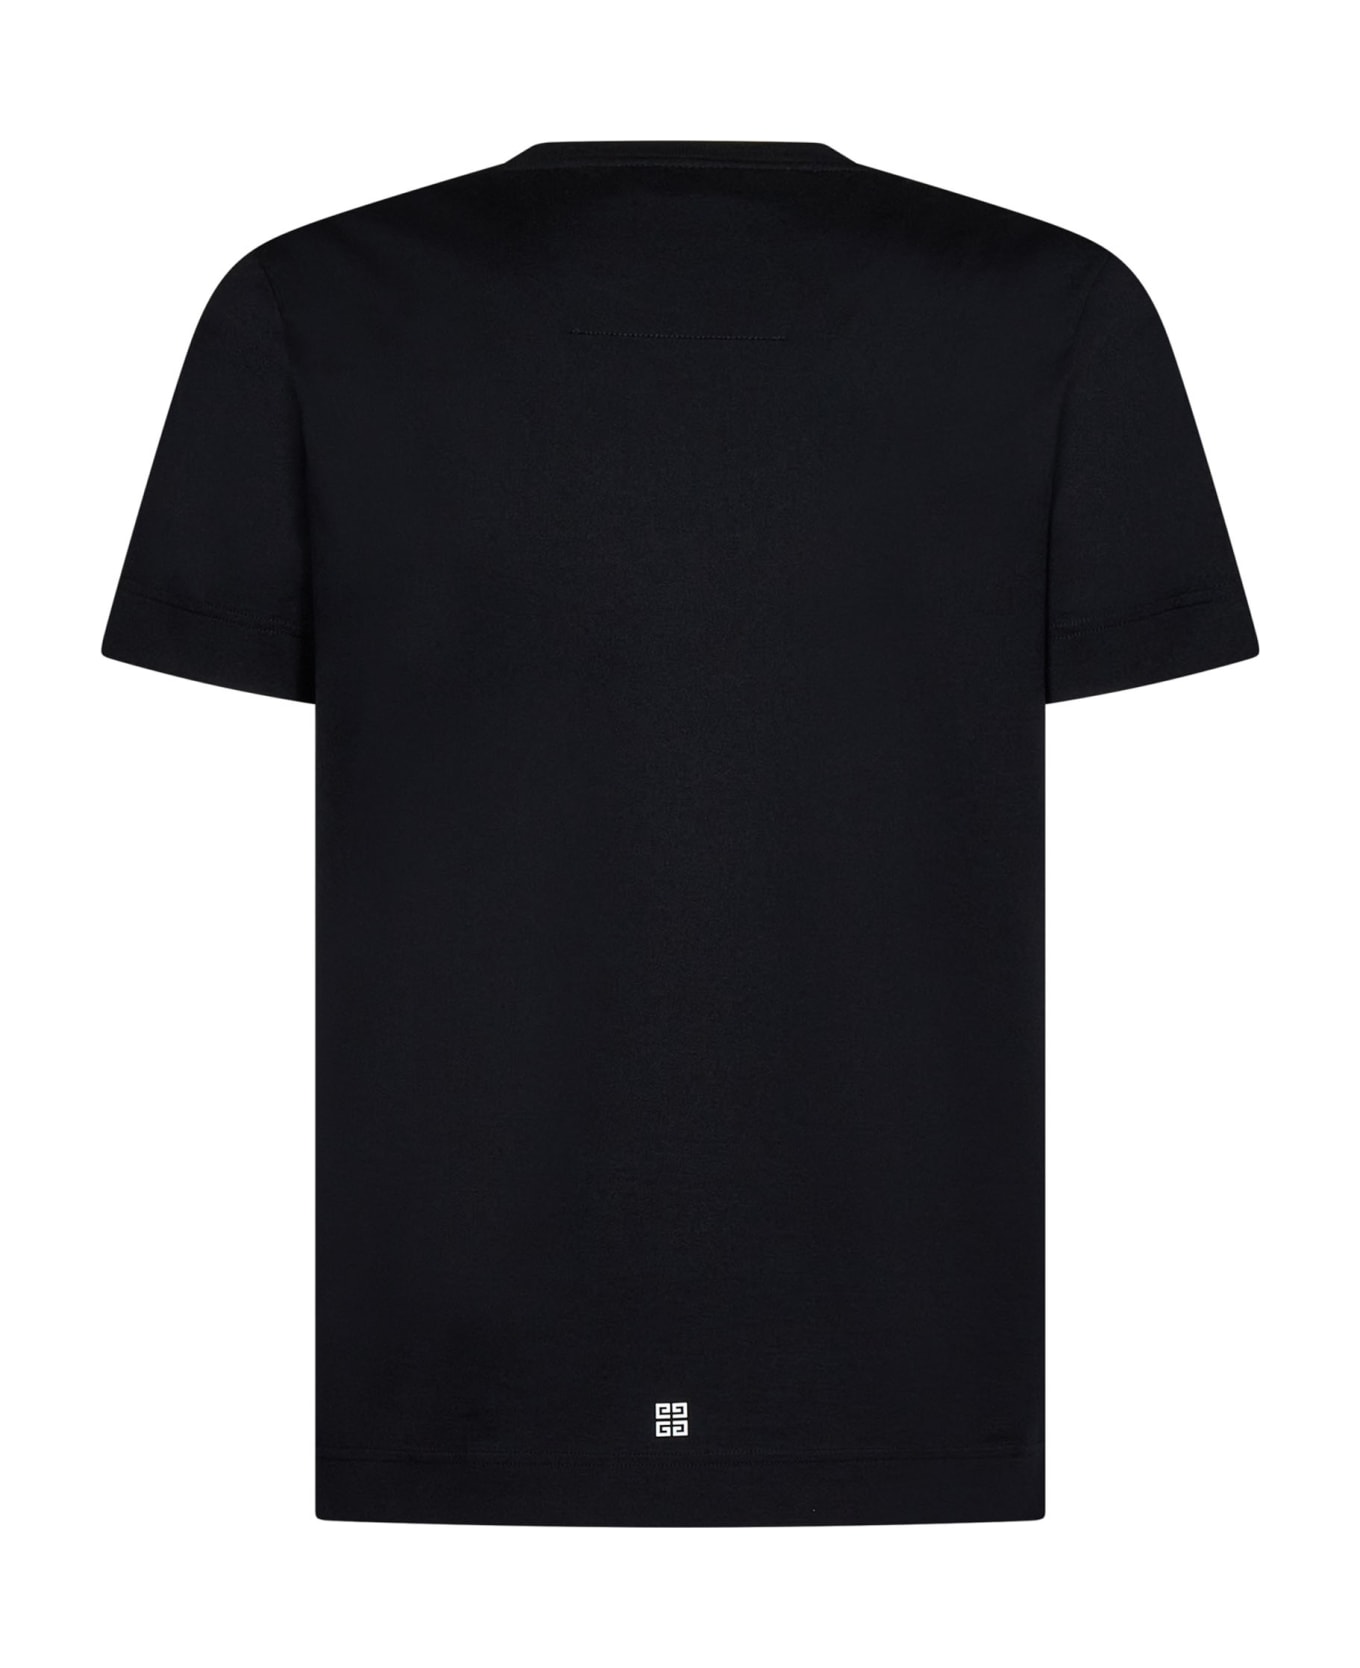 Givenchy 4g Stars T-shirt - Black シャツ